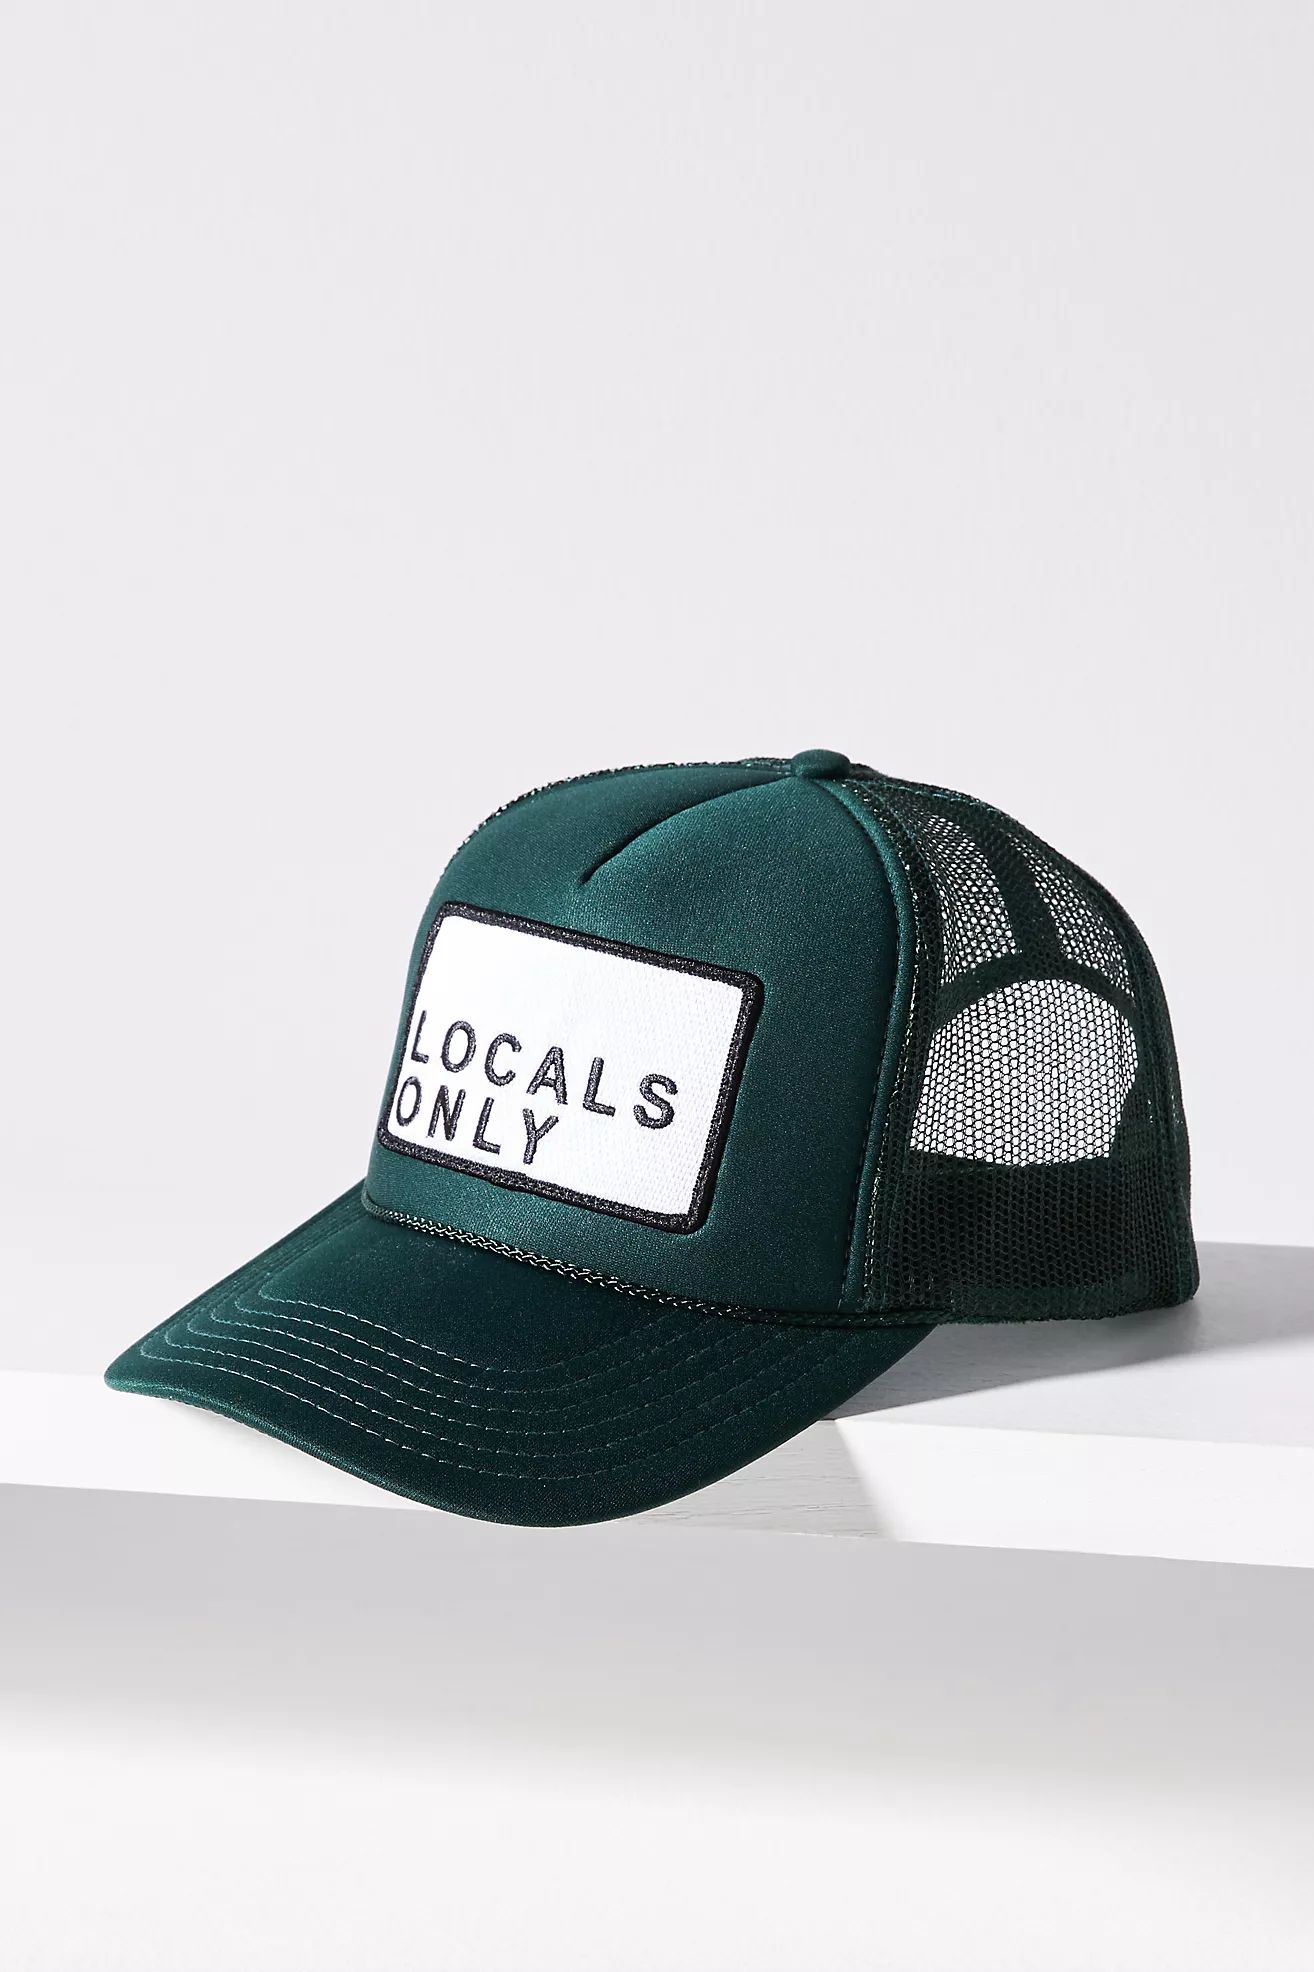 Friday Feelin Locals Only Trucker Hat | Anthropologie (US)